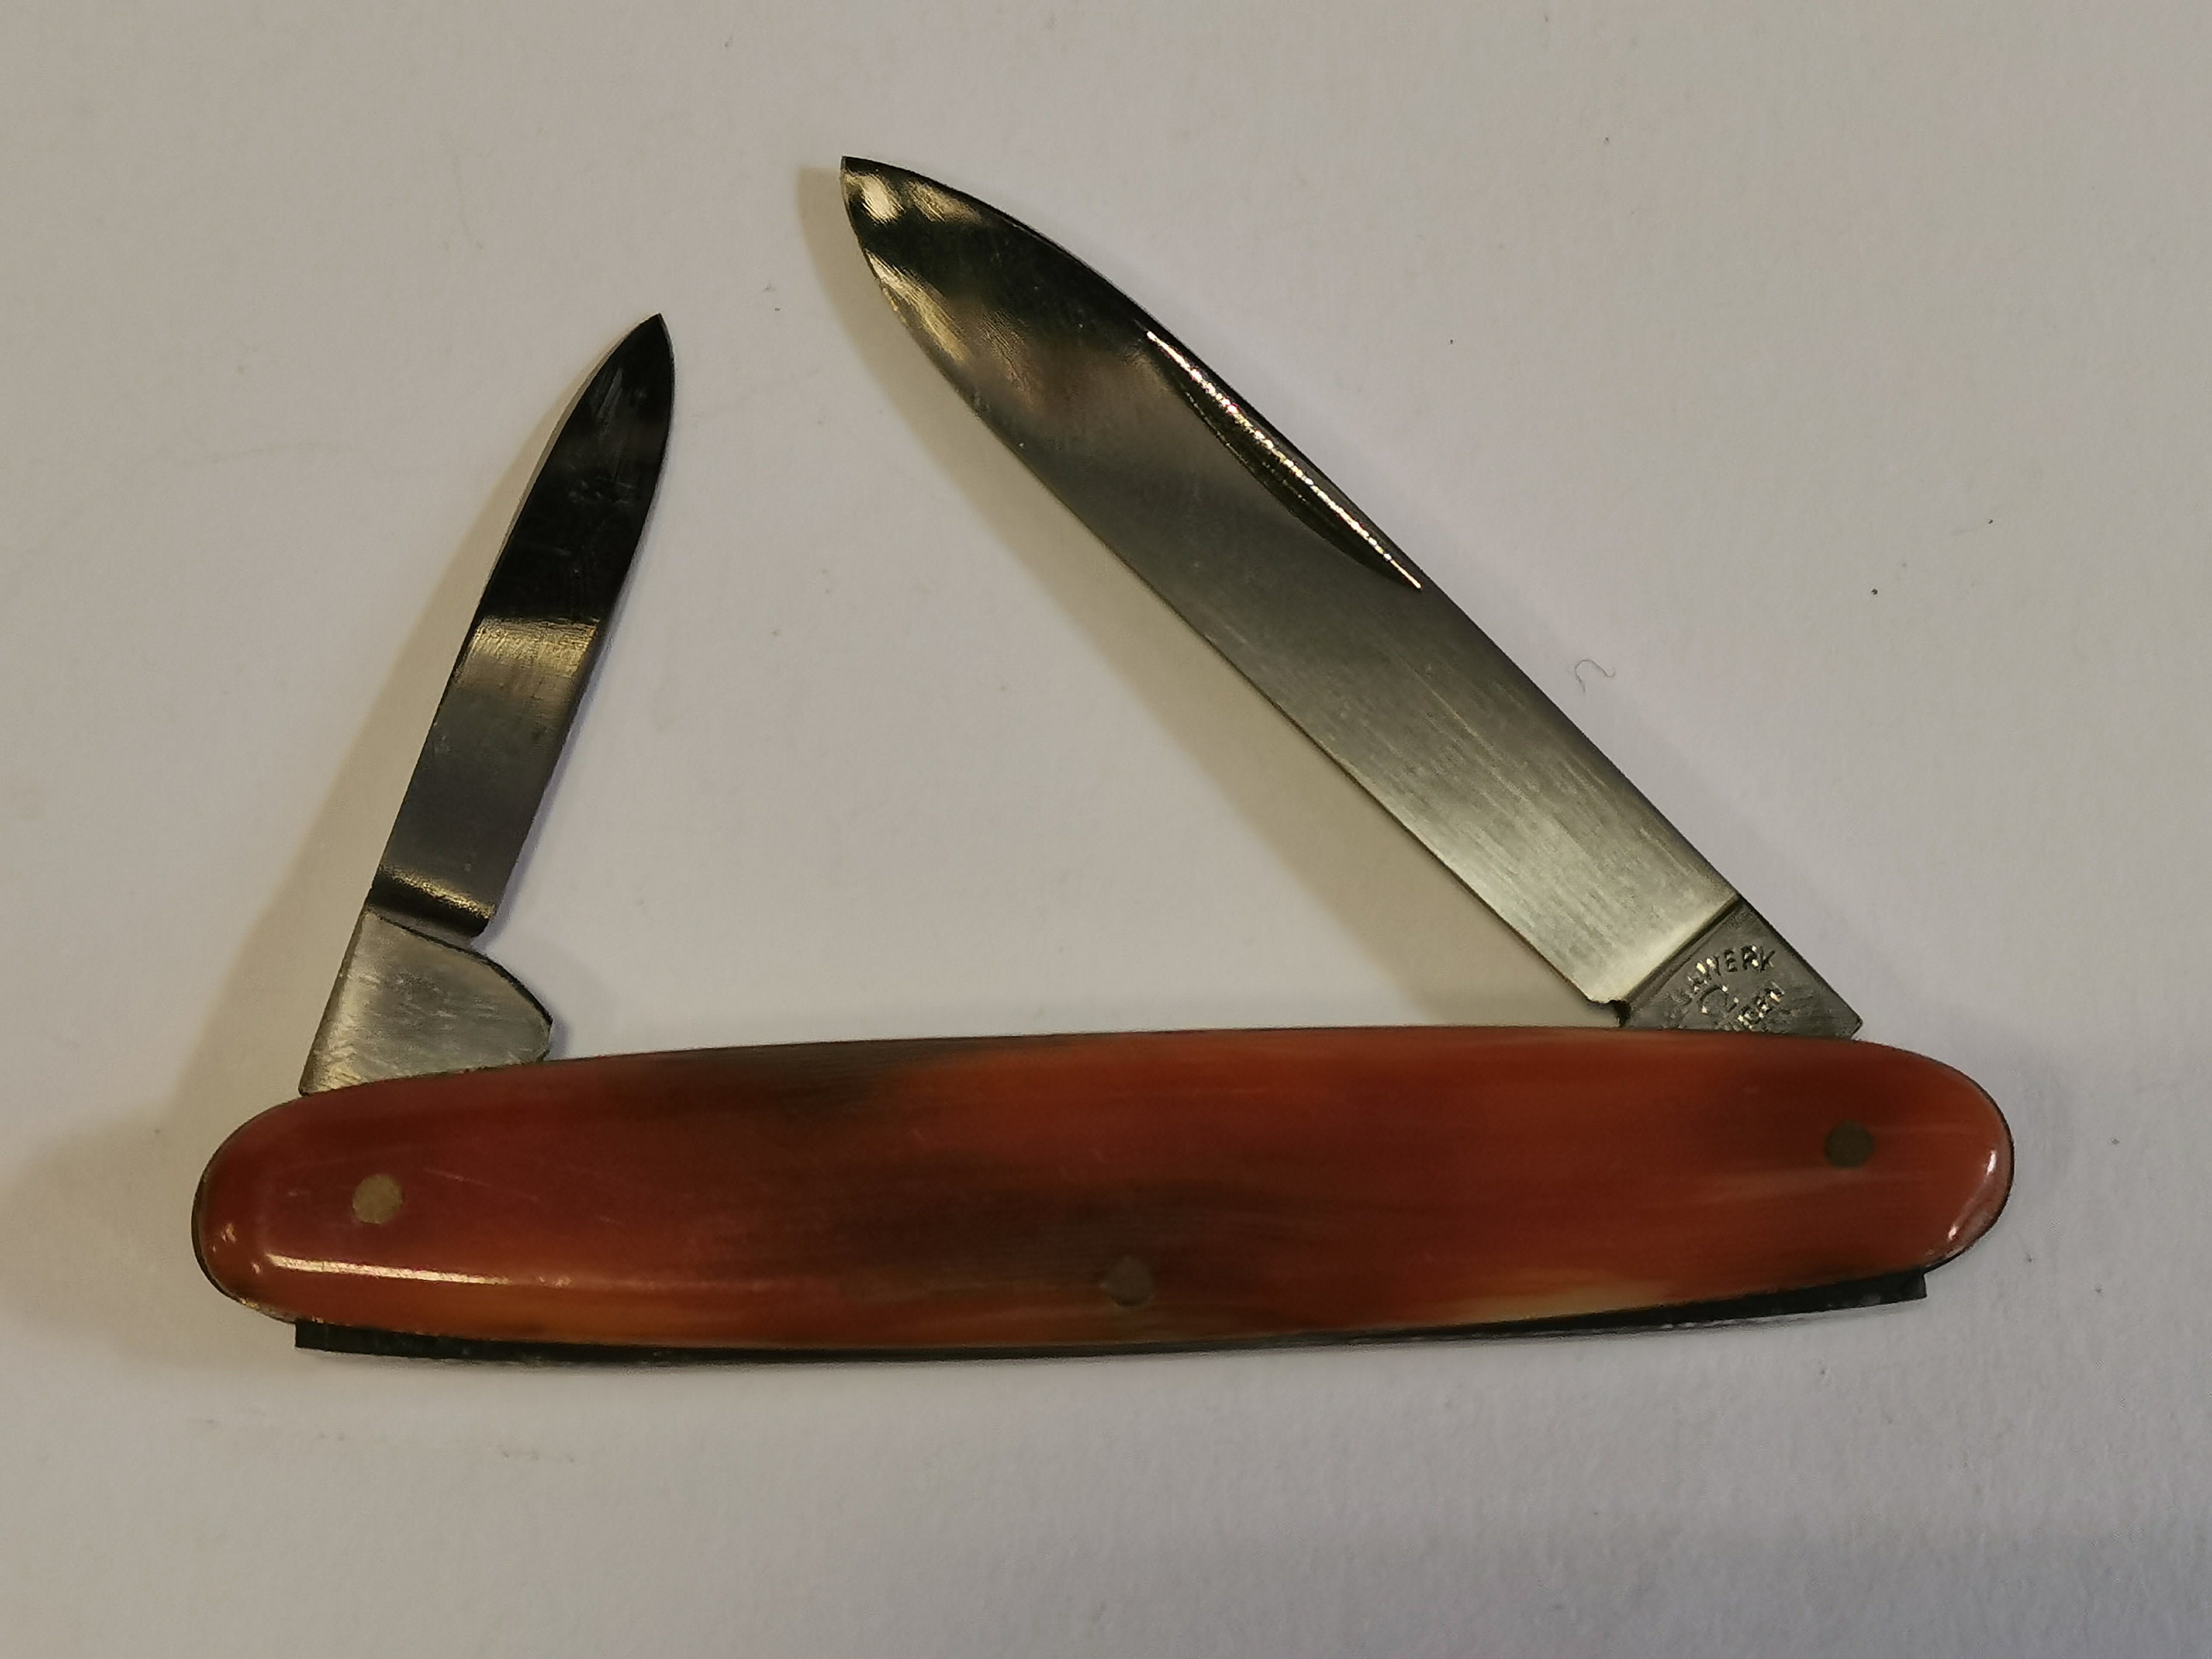 CERAMIC LOCKBACK FOLDING POCKET KNIFE - Lees Cutlery